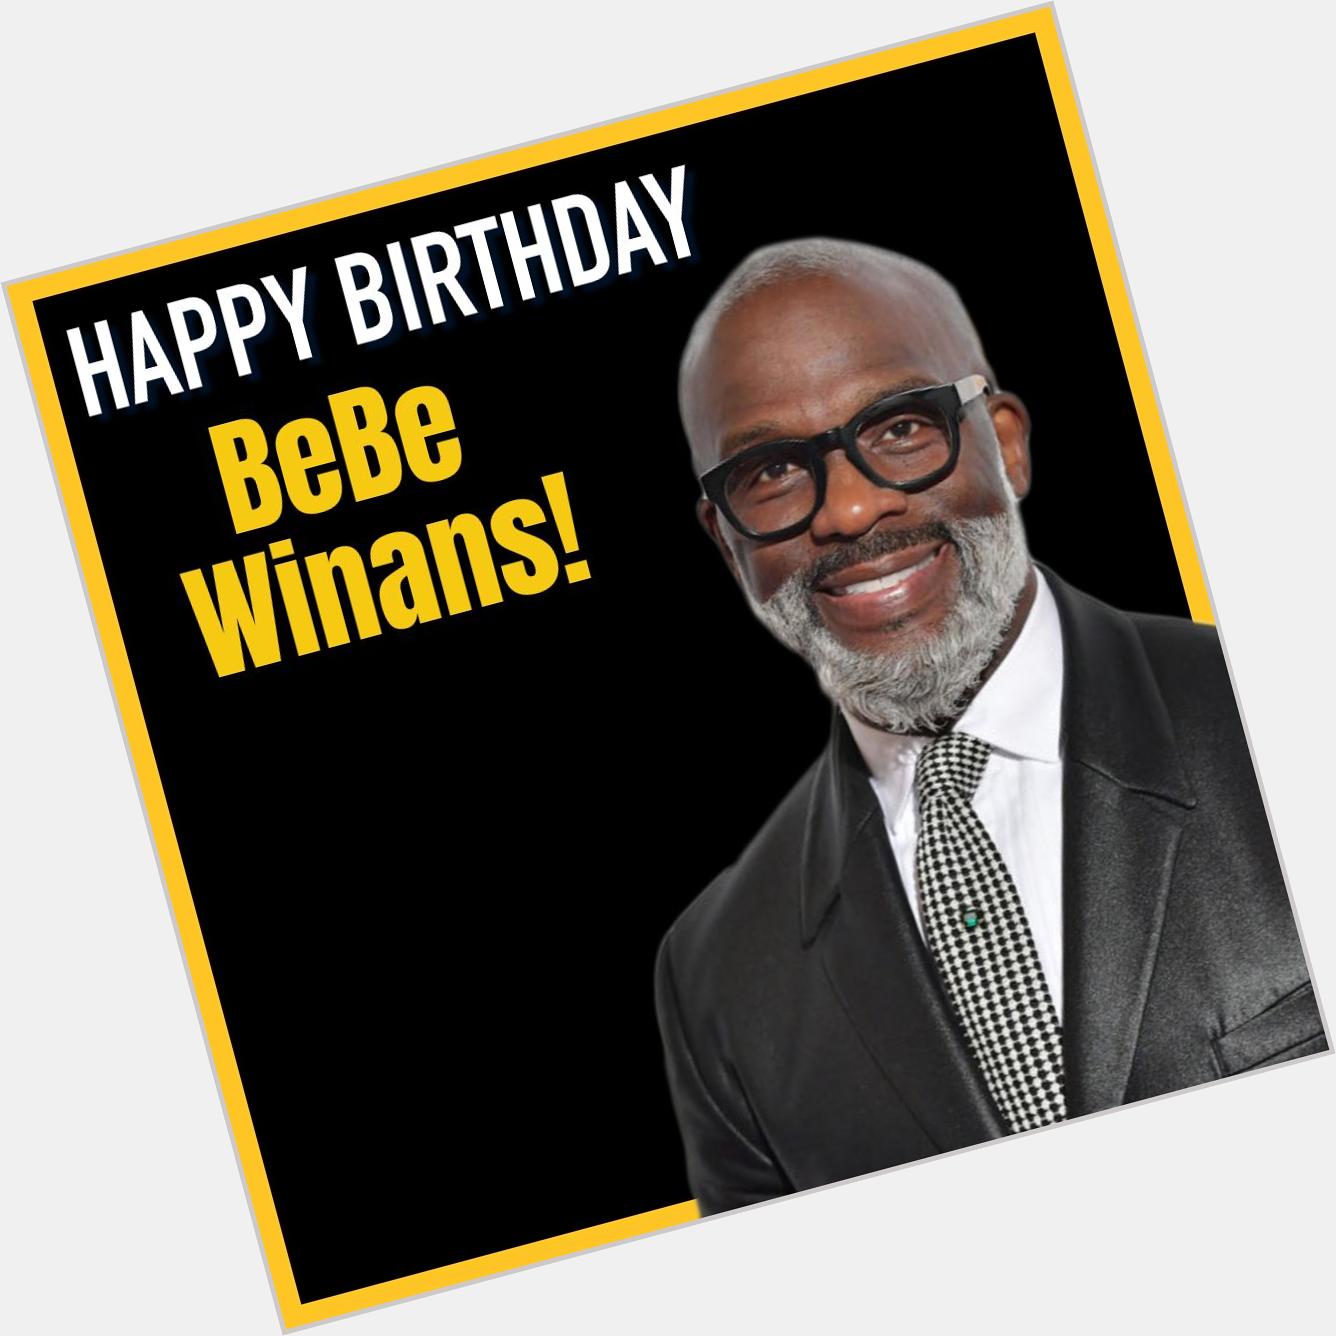 Happy Birthday to BeBe Winans! He\s turning 57 today. 